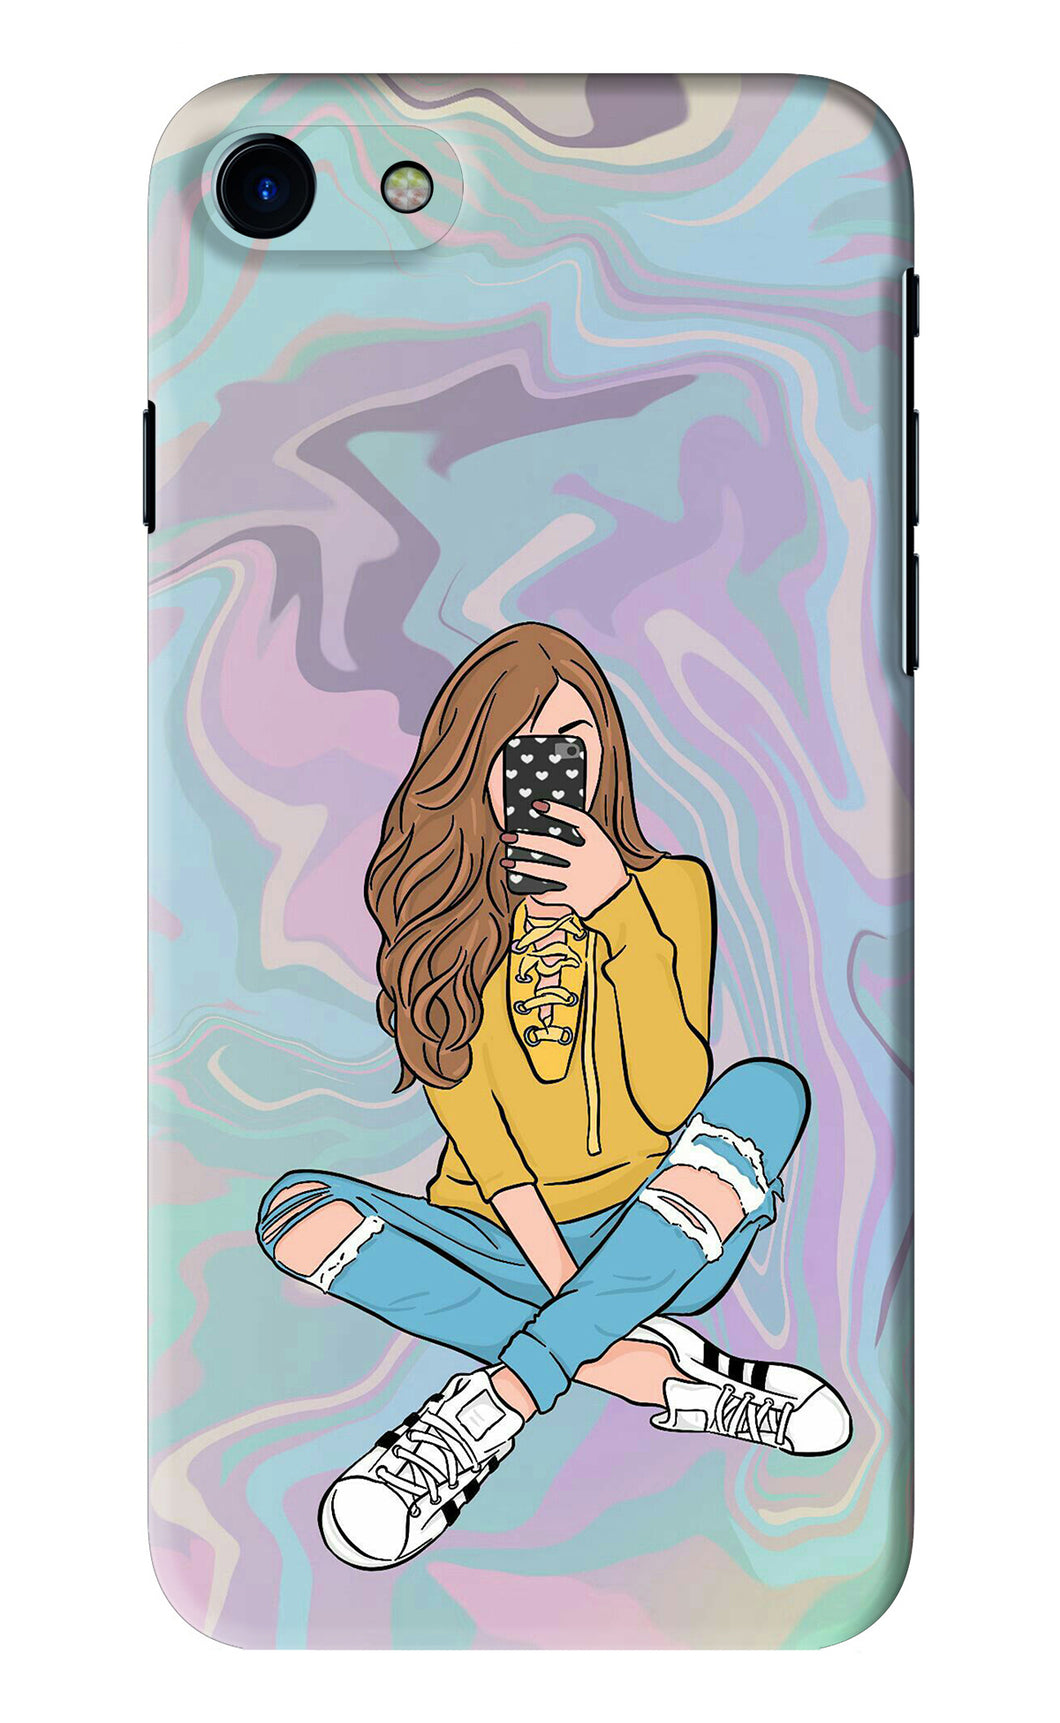 Selfie Girl iPhone 7 Back Skin Wrap